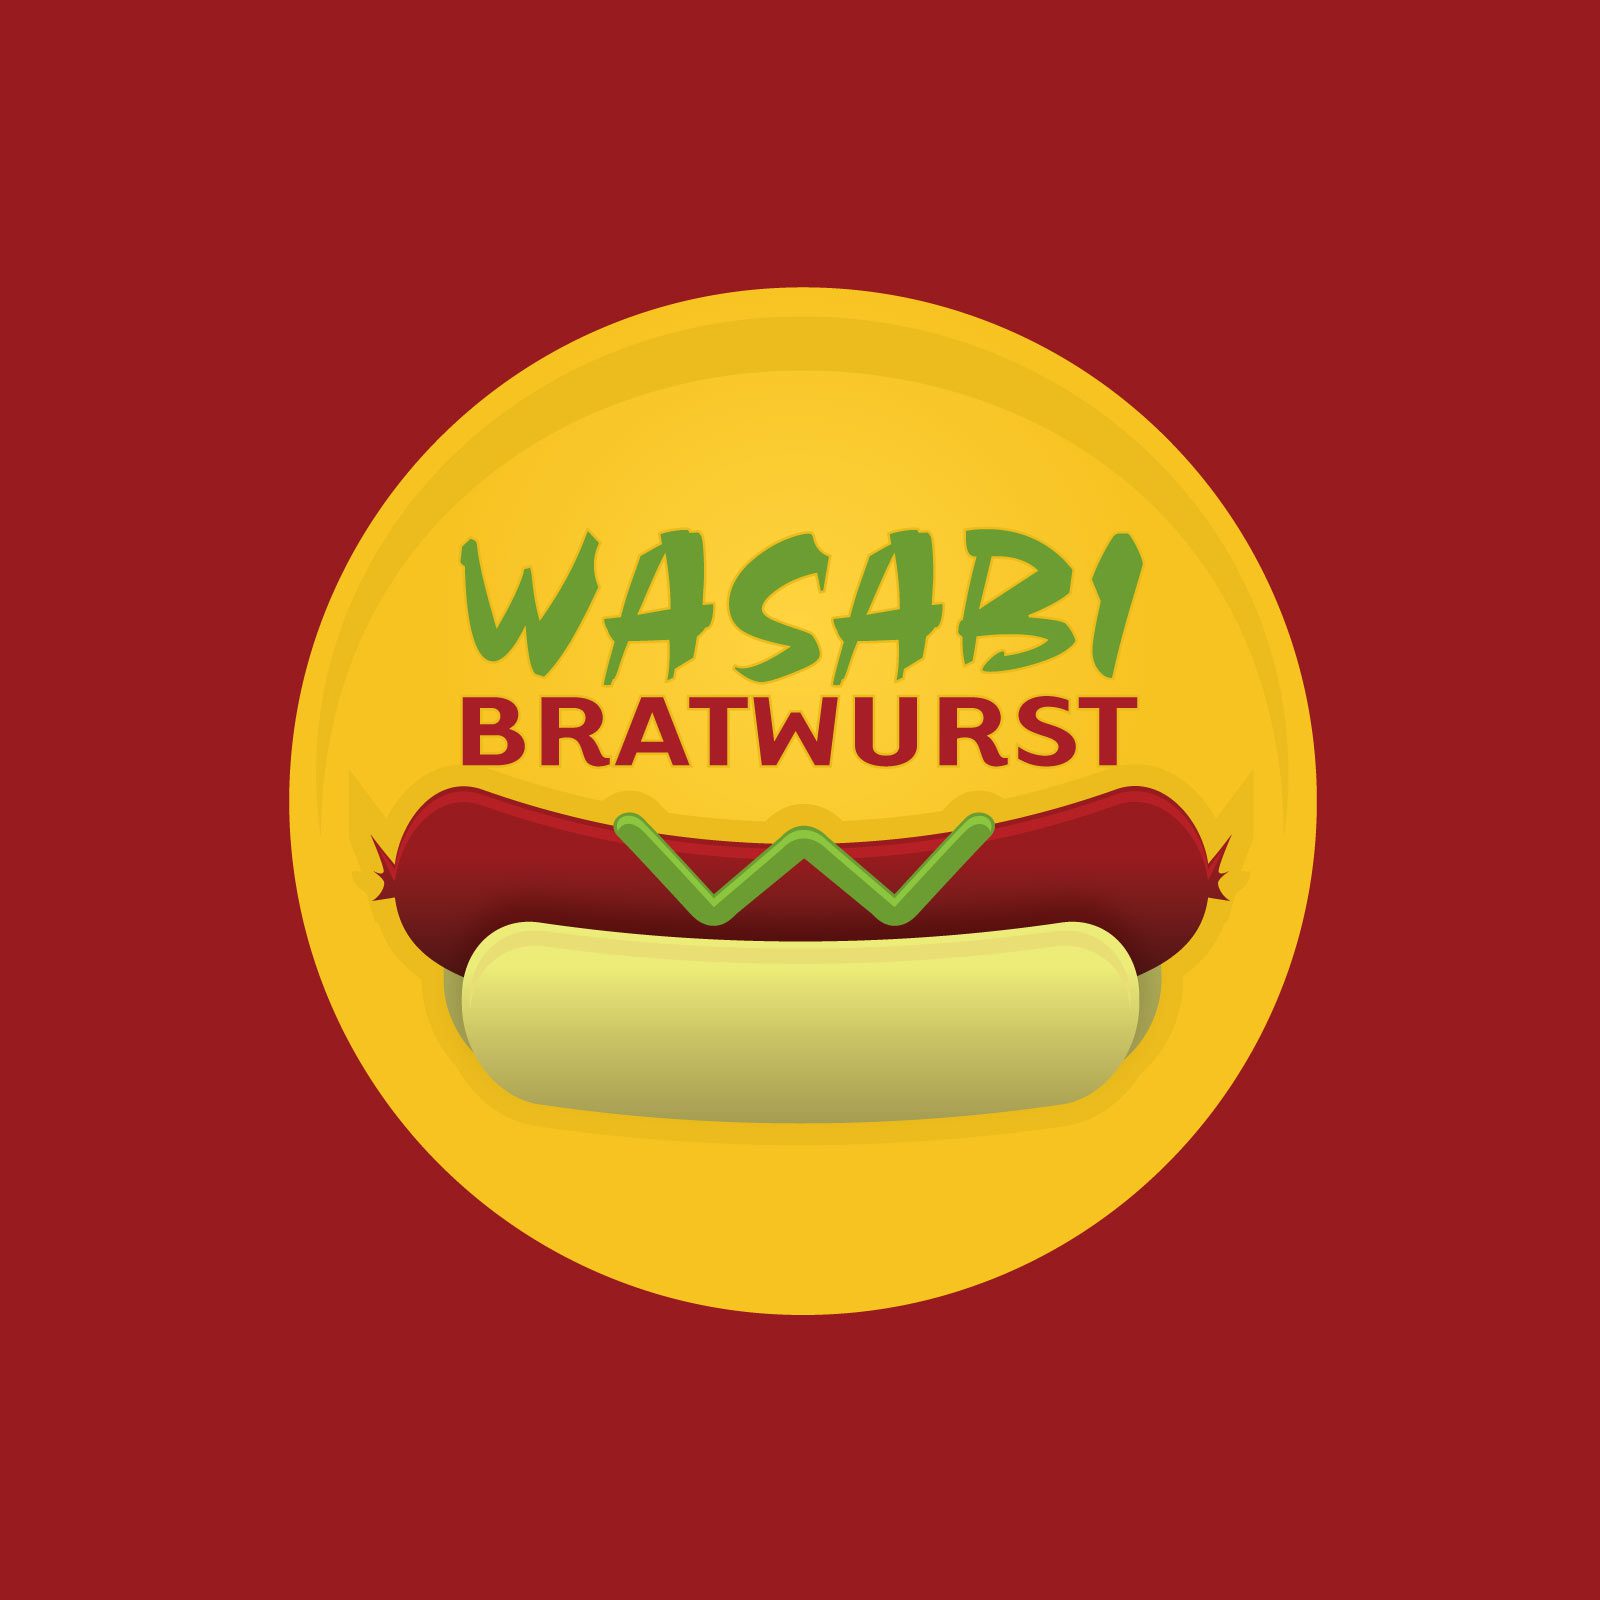 Wasabi Bratwurst